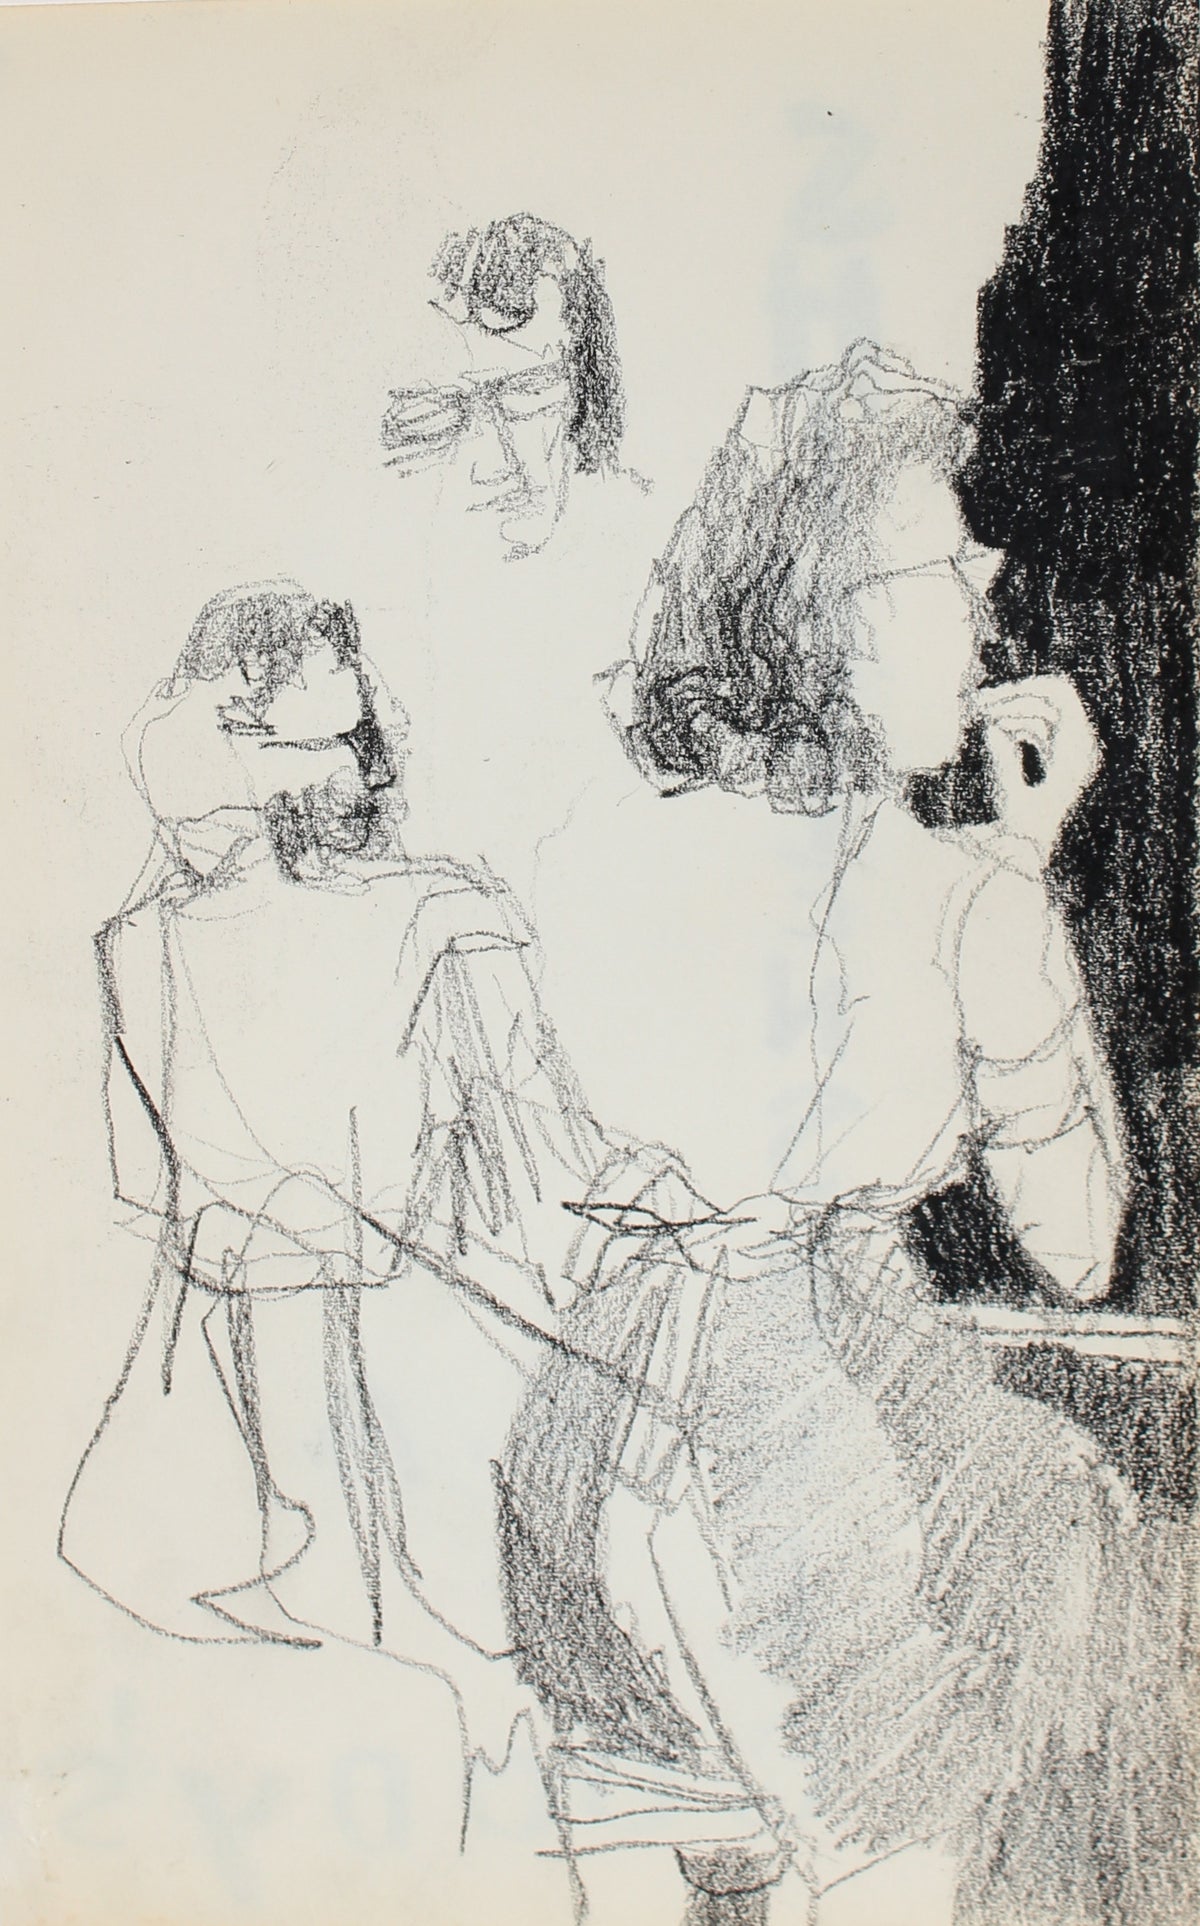 Petite Female Figurative Study&lt;br&gt;Charcoal, 1950-60s&lt;br&gt;&lt;br&gt;#0294